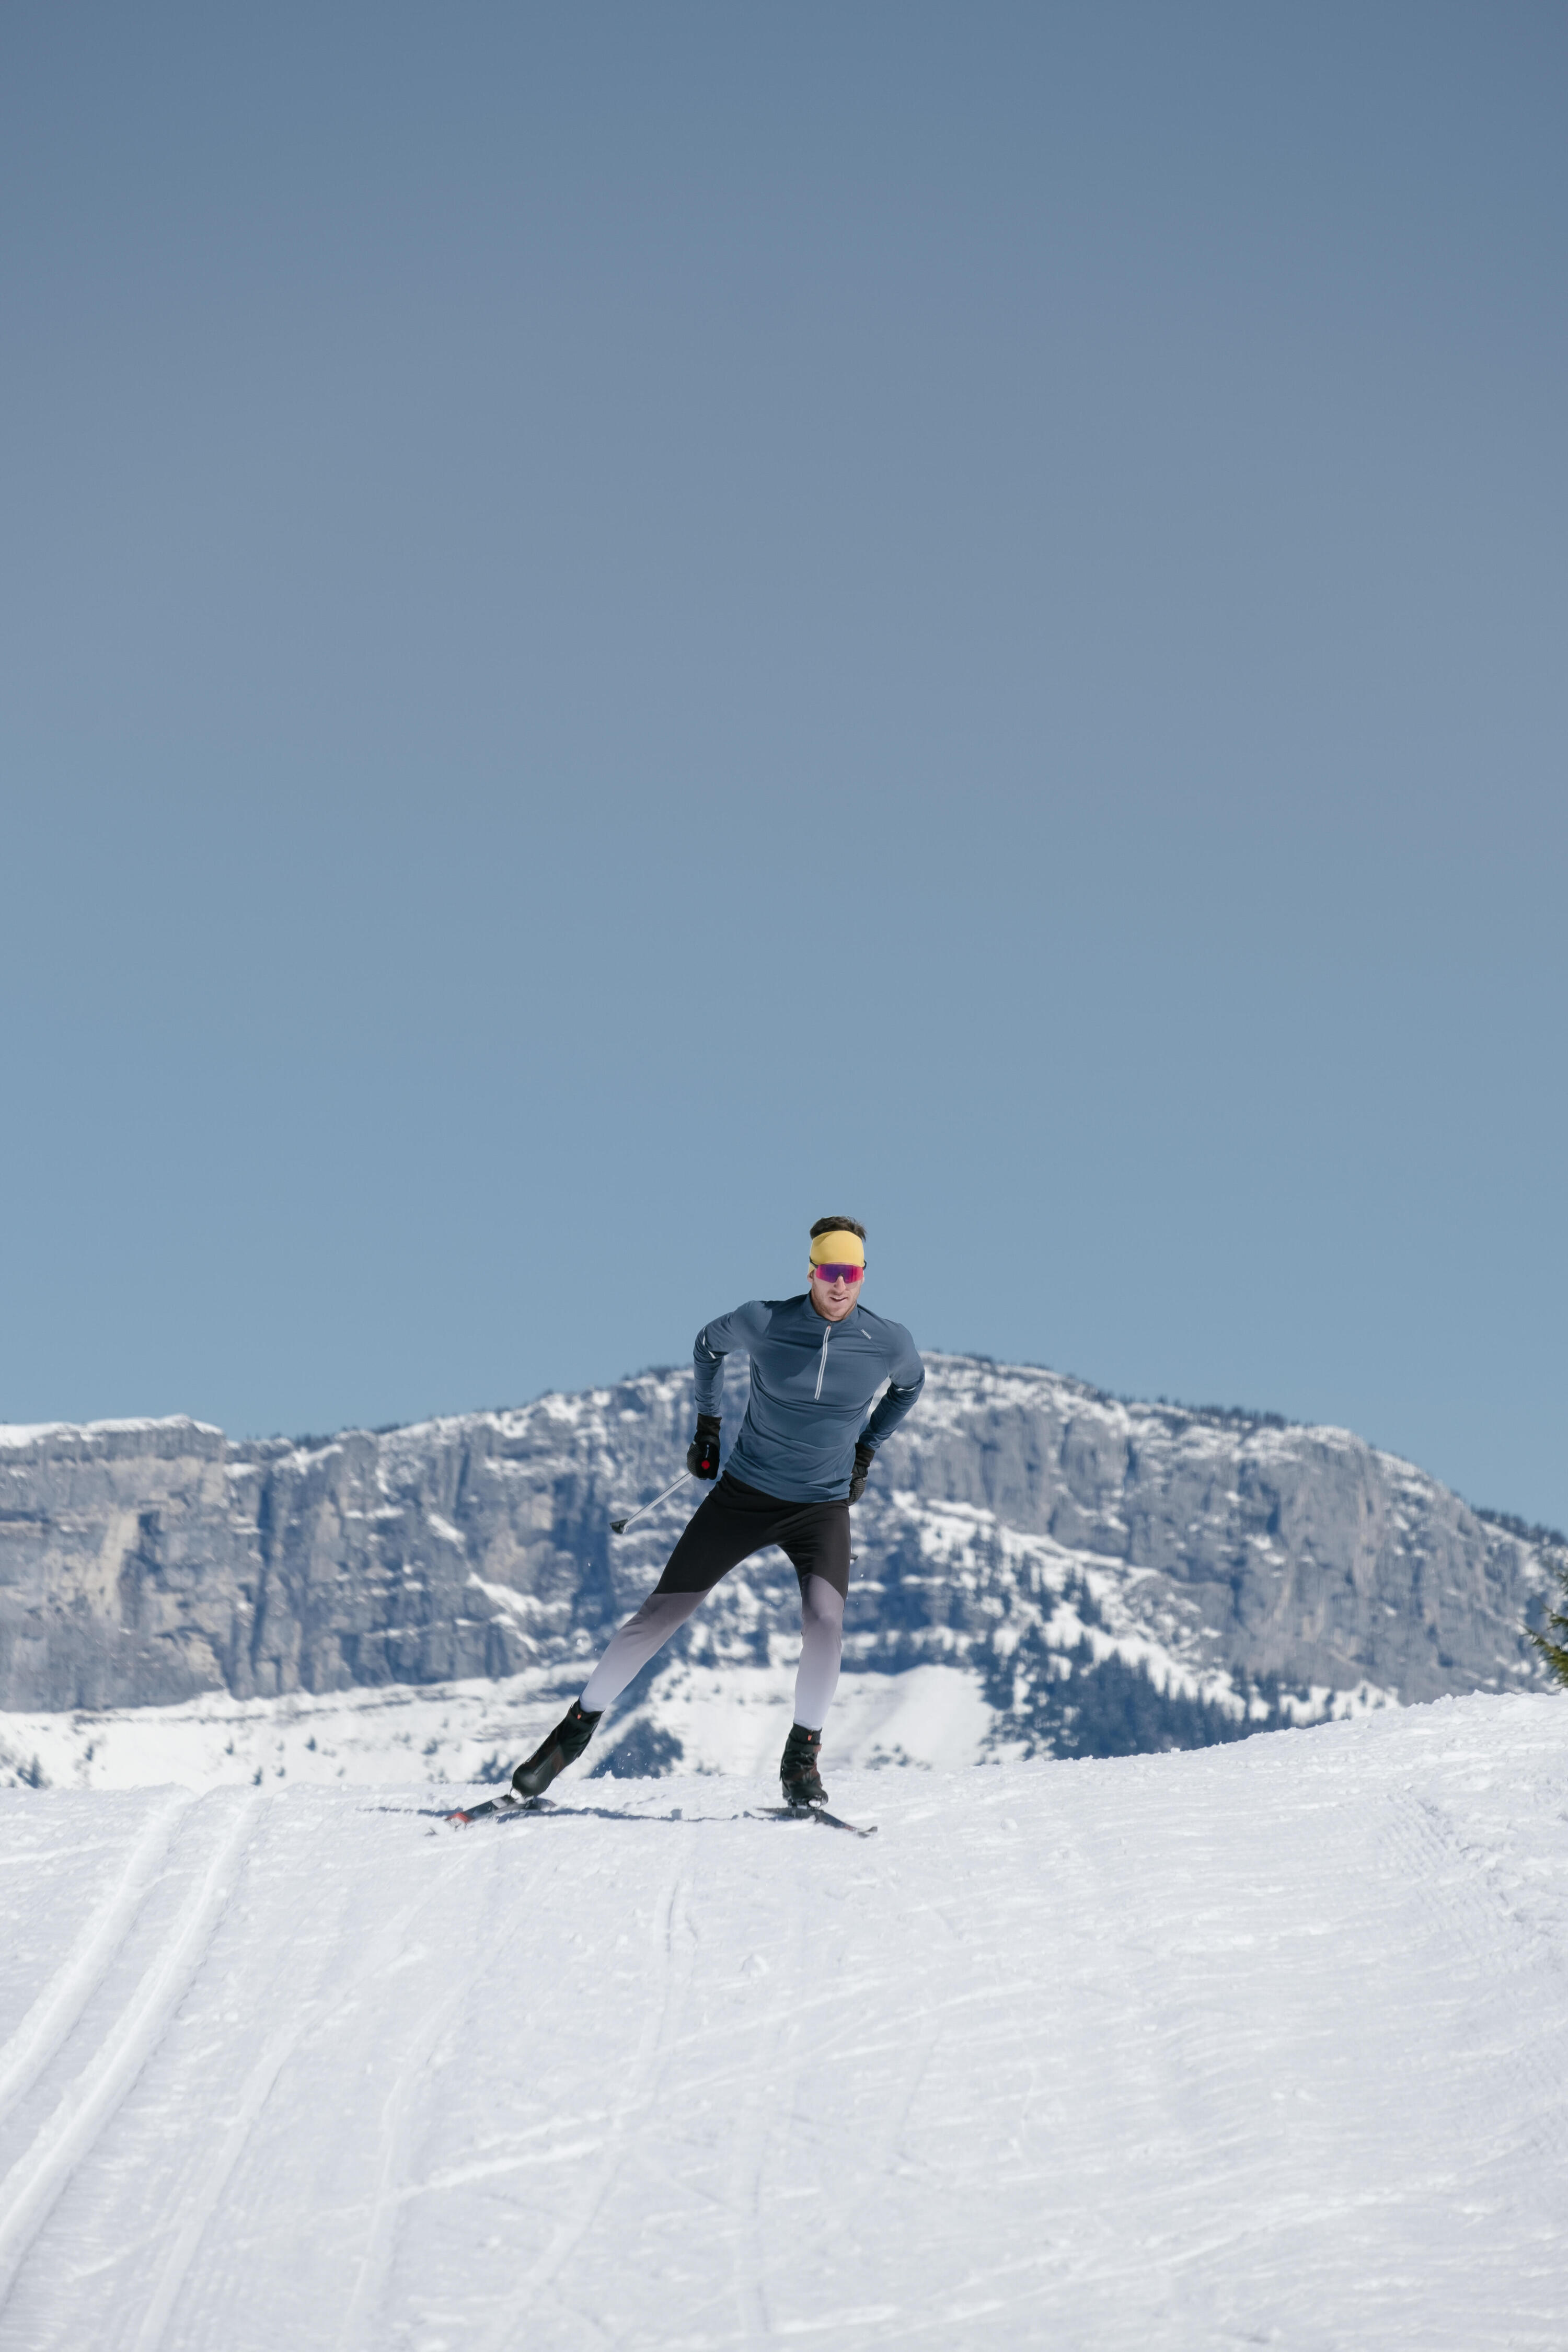 AD cross-country skis HARD camber skating 550+Rottefella Xcelerator Pro bindings 3/6